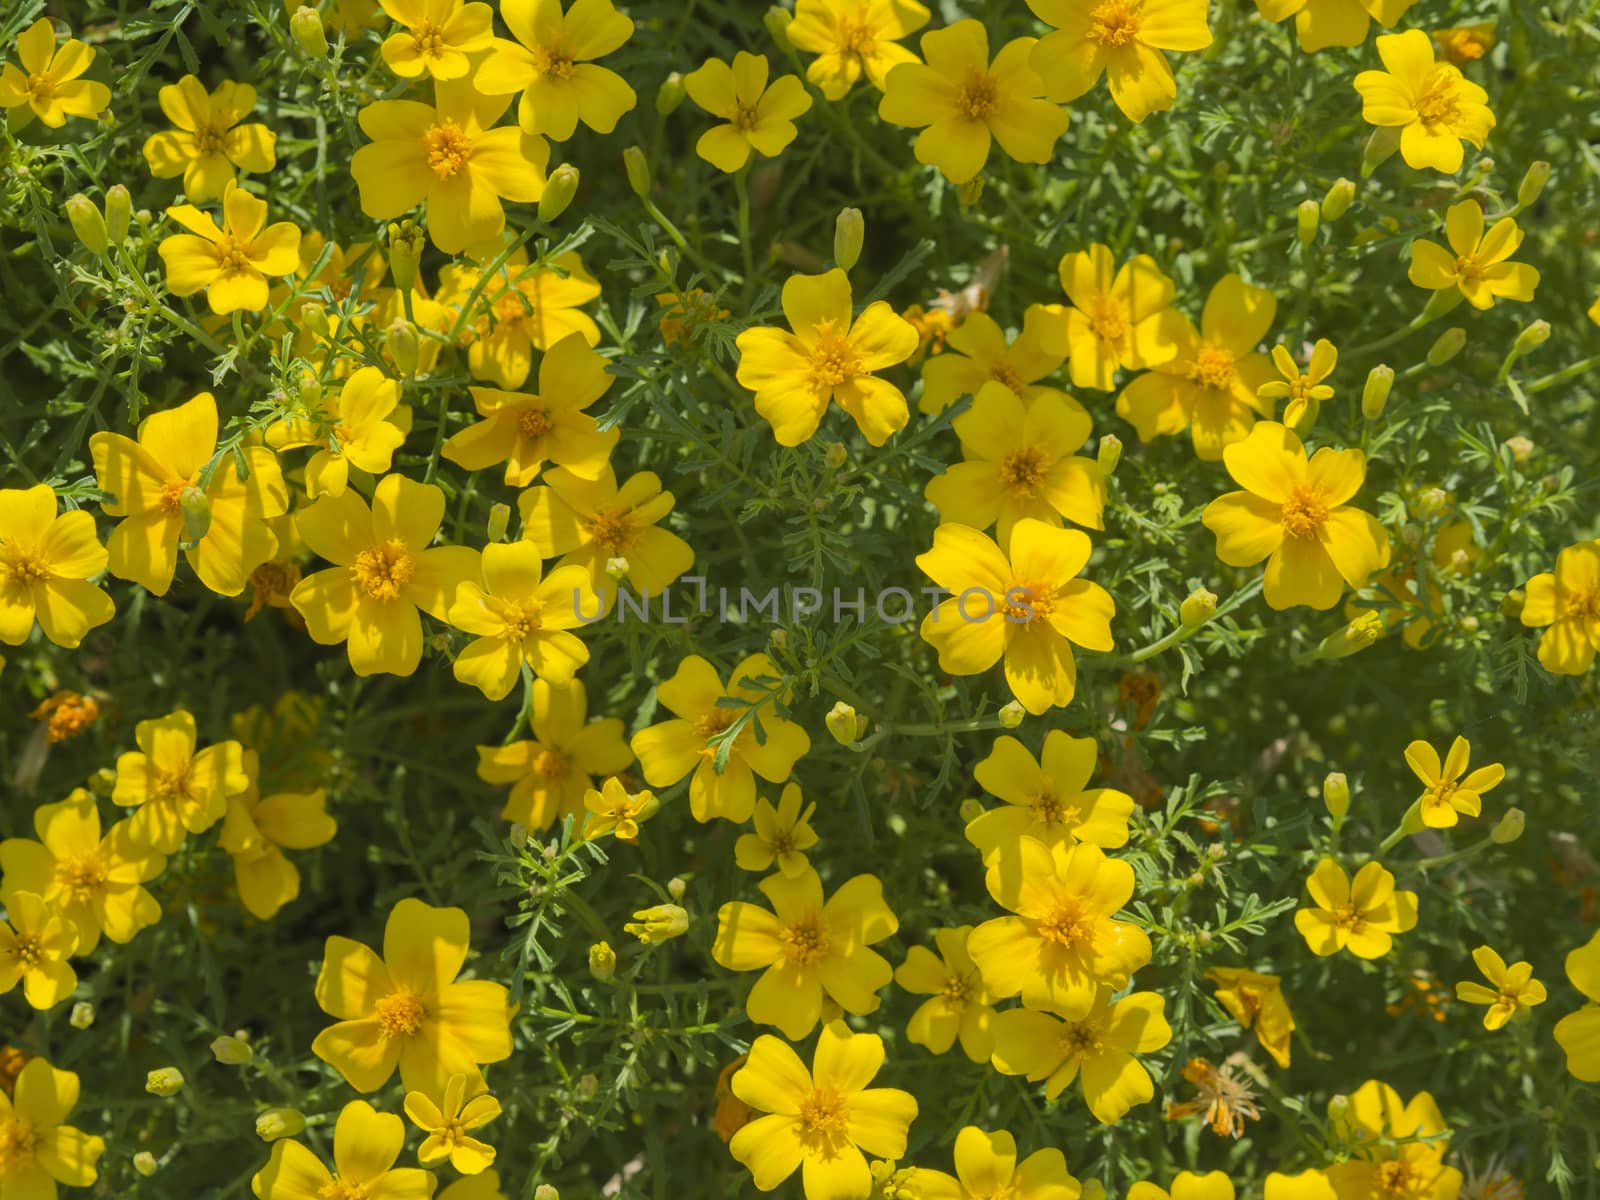 planty yellow flowers plant decorative background - Potentilla